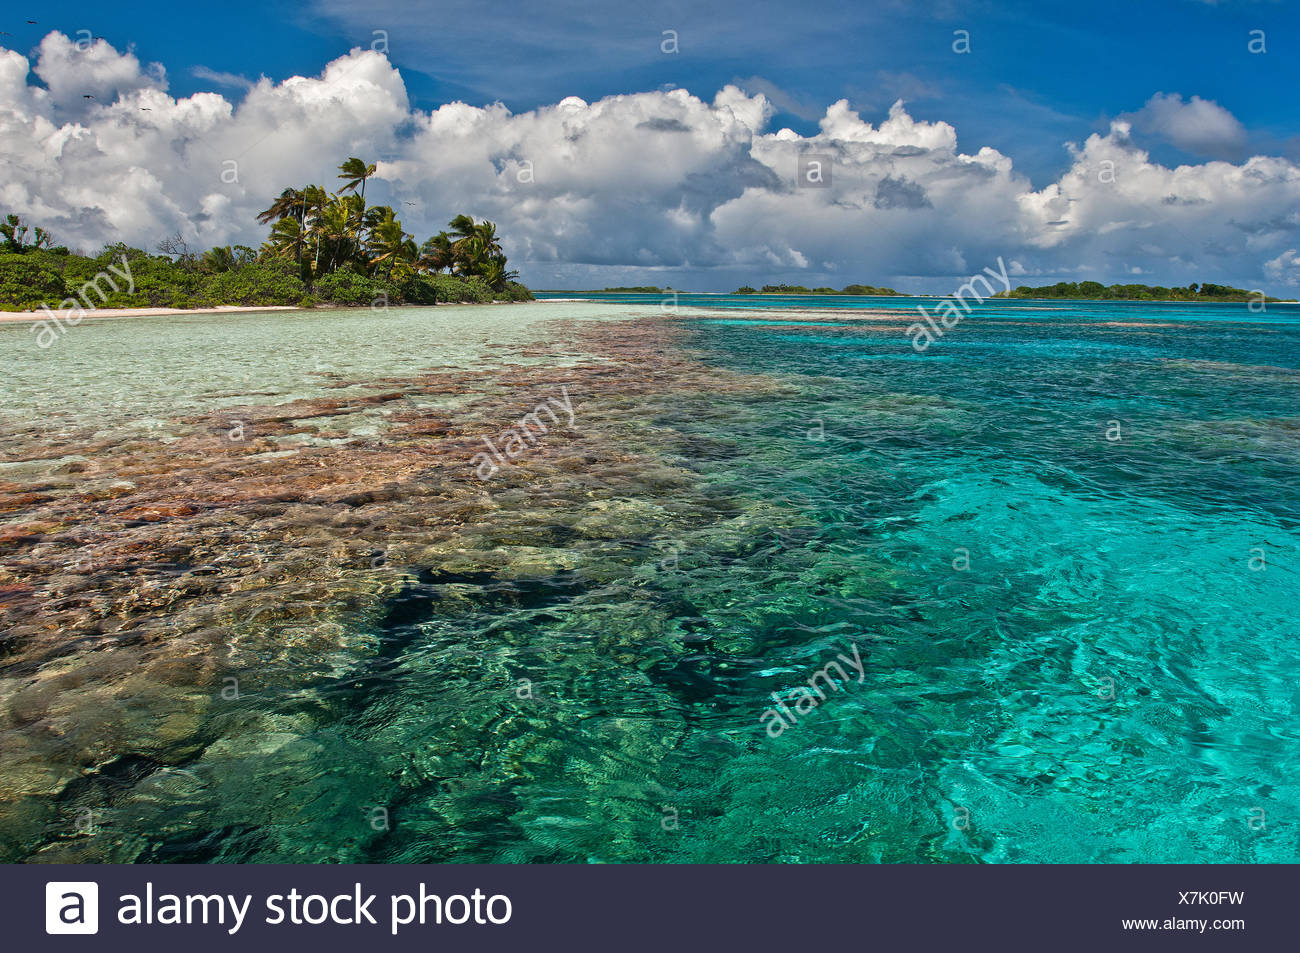 Kiribati Atoll Stock Photos & Kiribati Atoll Stock Images - Alamy